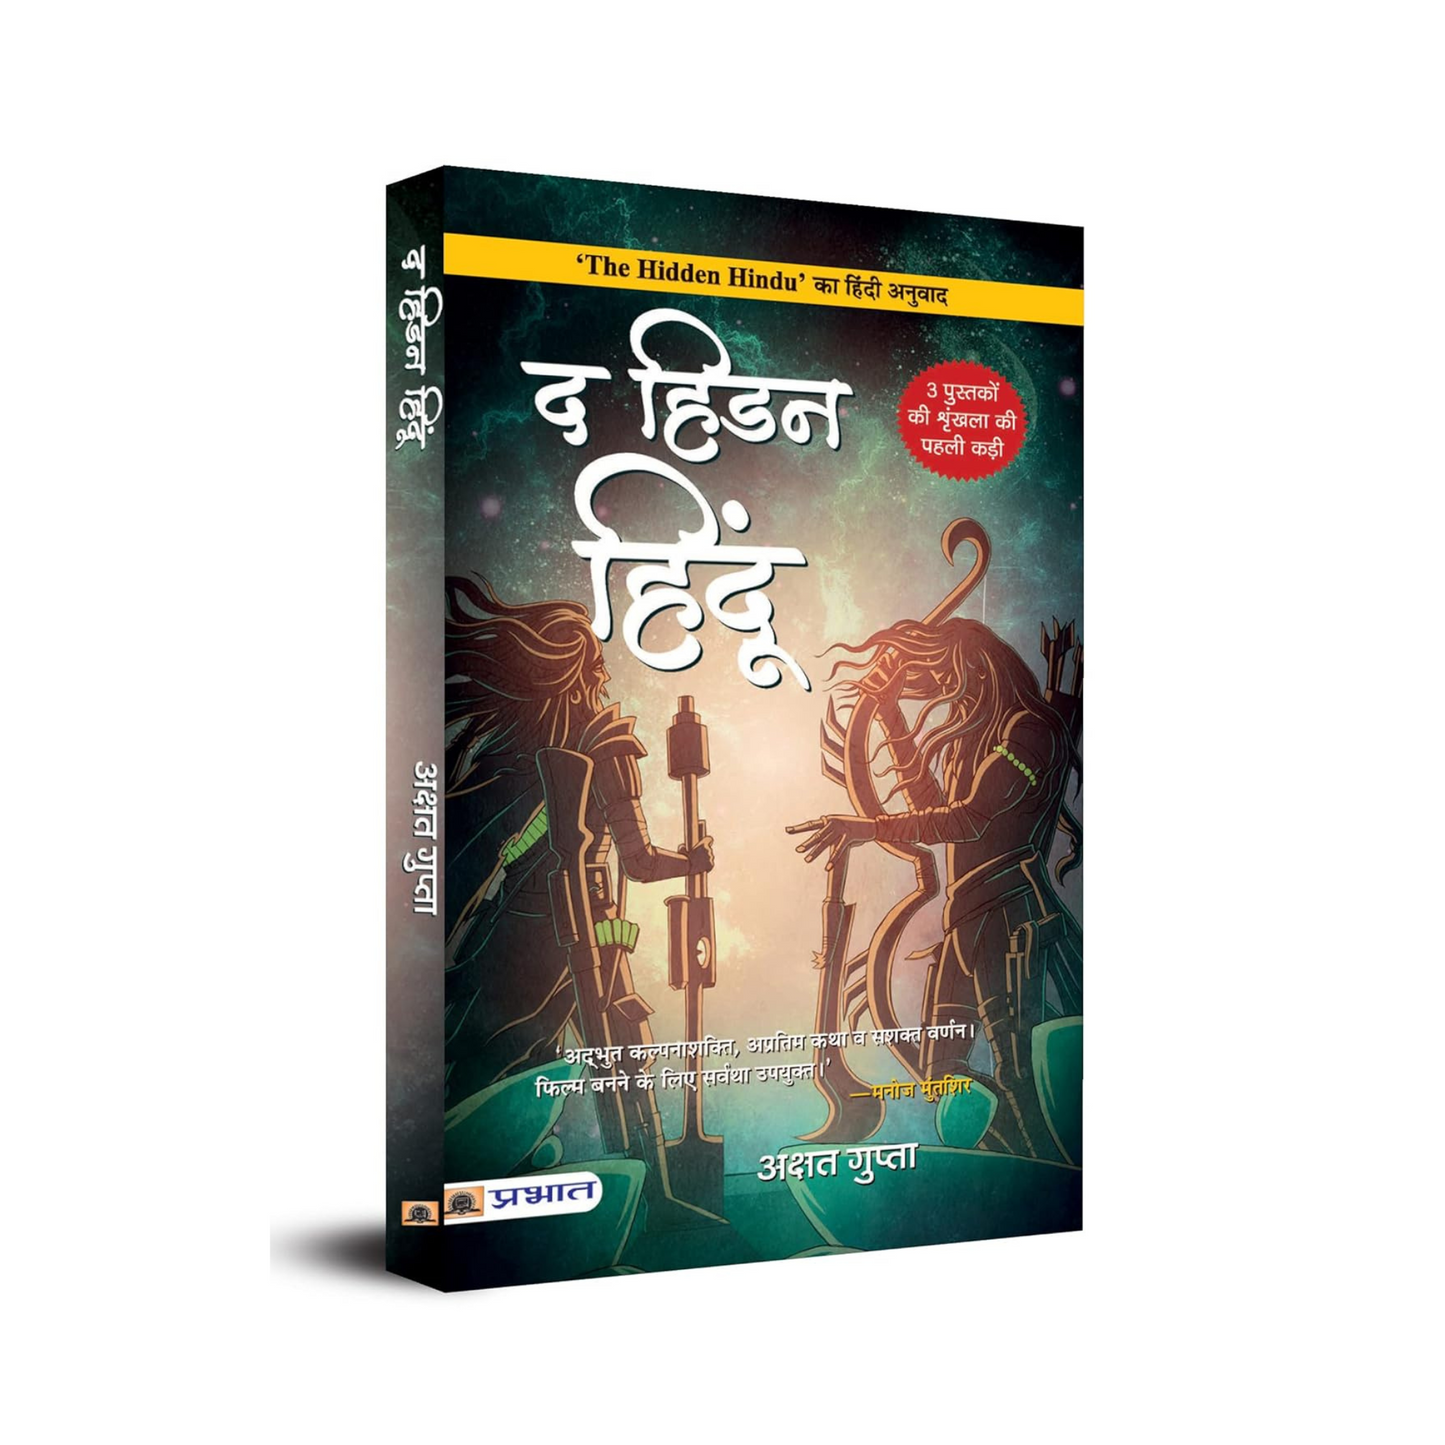 [Hindi] The Hidden Hindu (Book 1) by Akshat Gupta (Paperback)